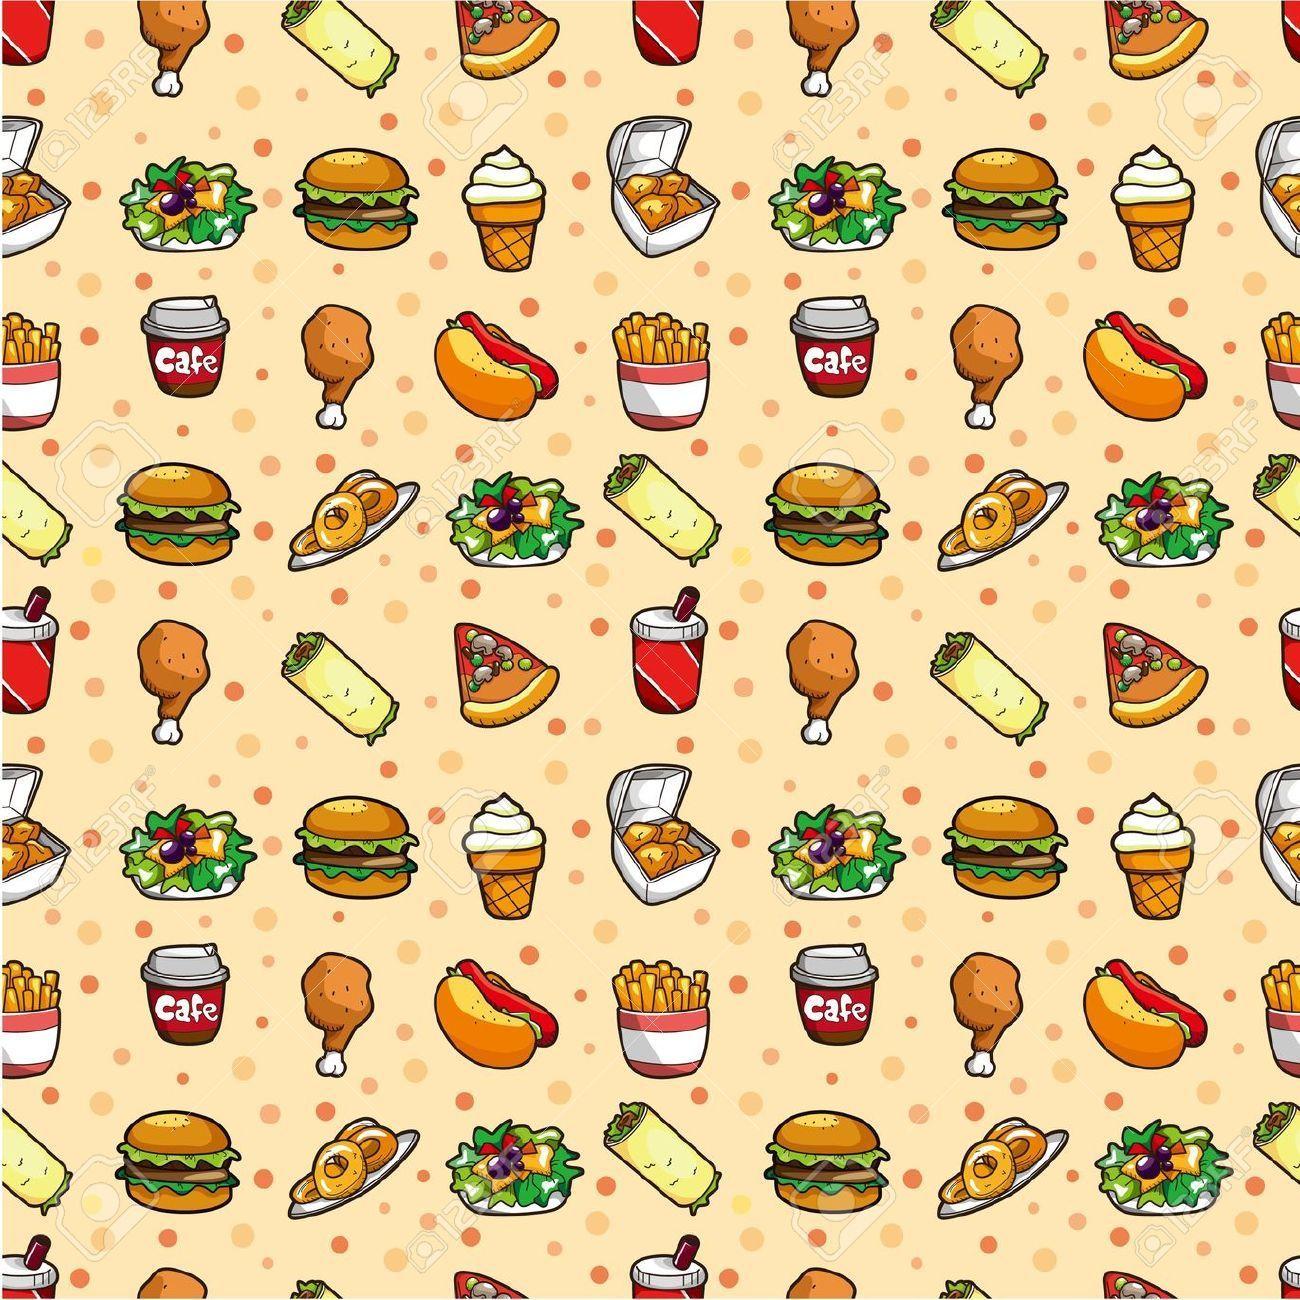 Food Background Images Cartoon